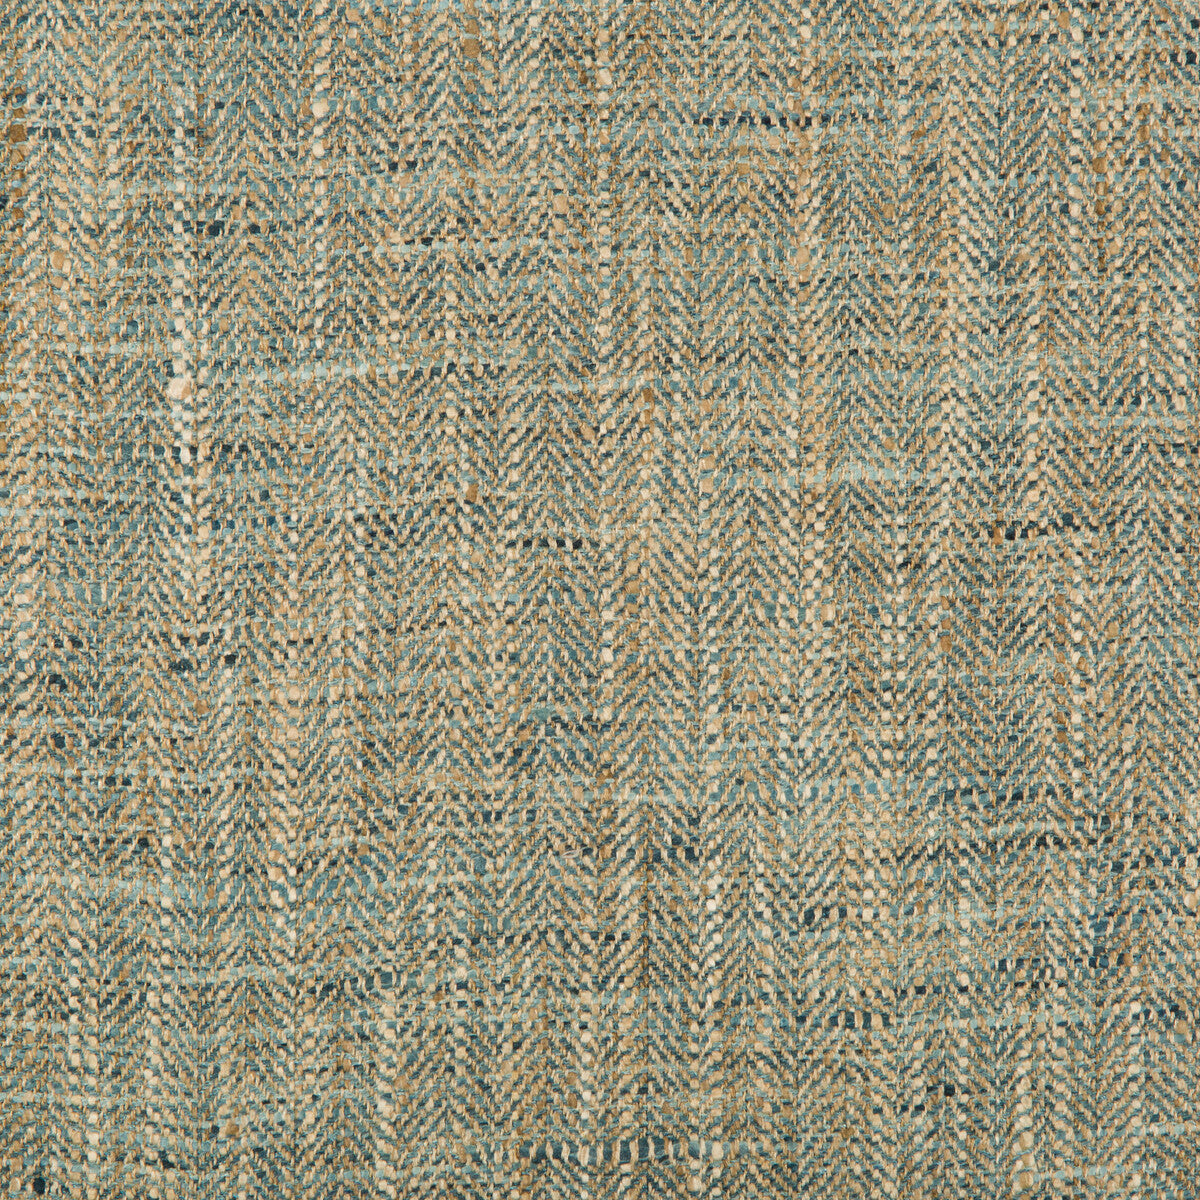 Kravet Smart fabric in 34088-1635 color - pattern 34088.1635.0 - by Kravet Smart